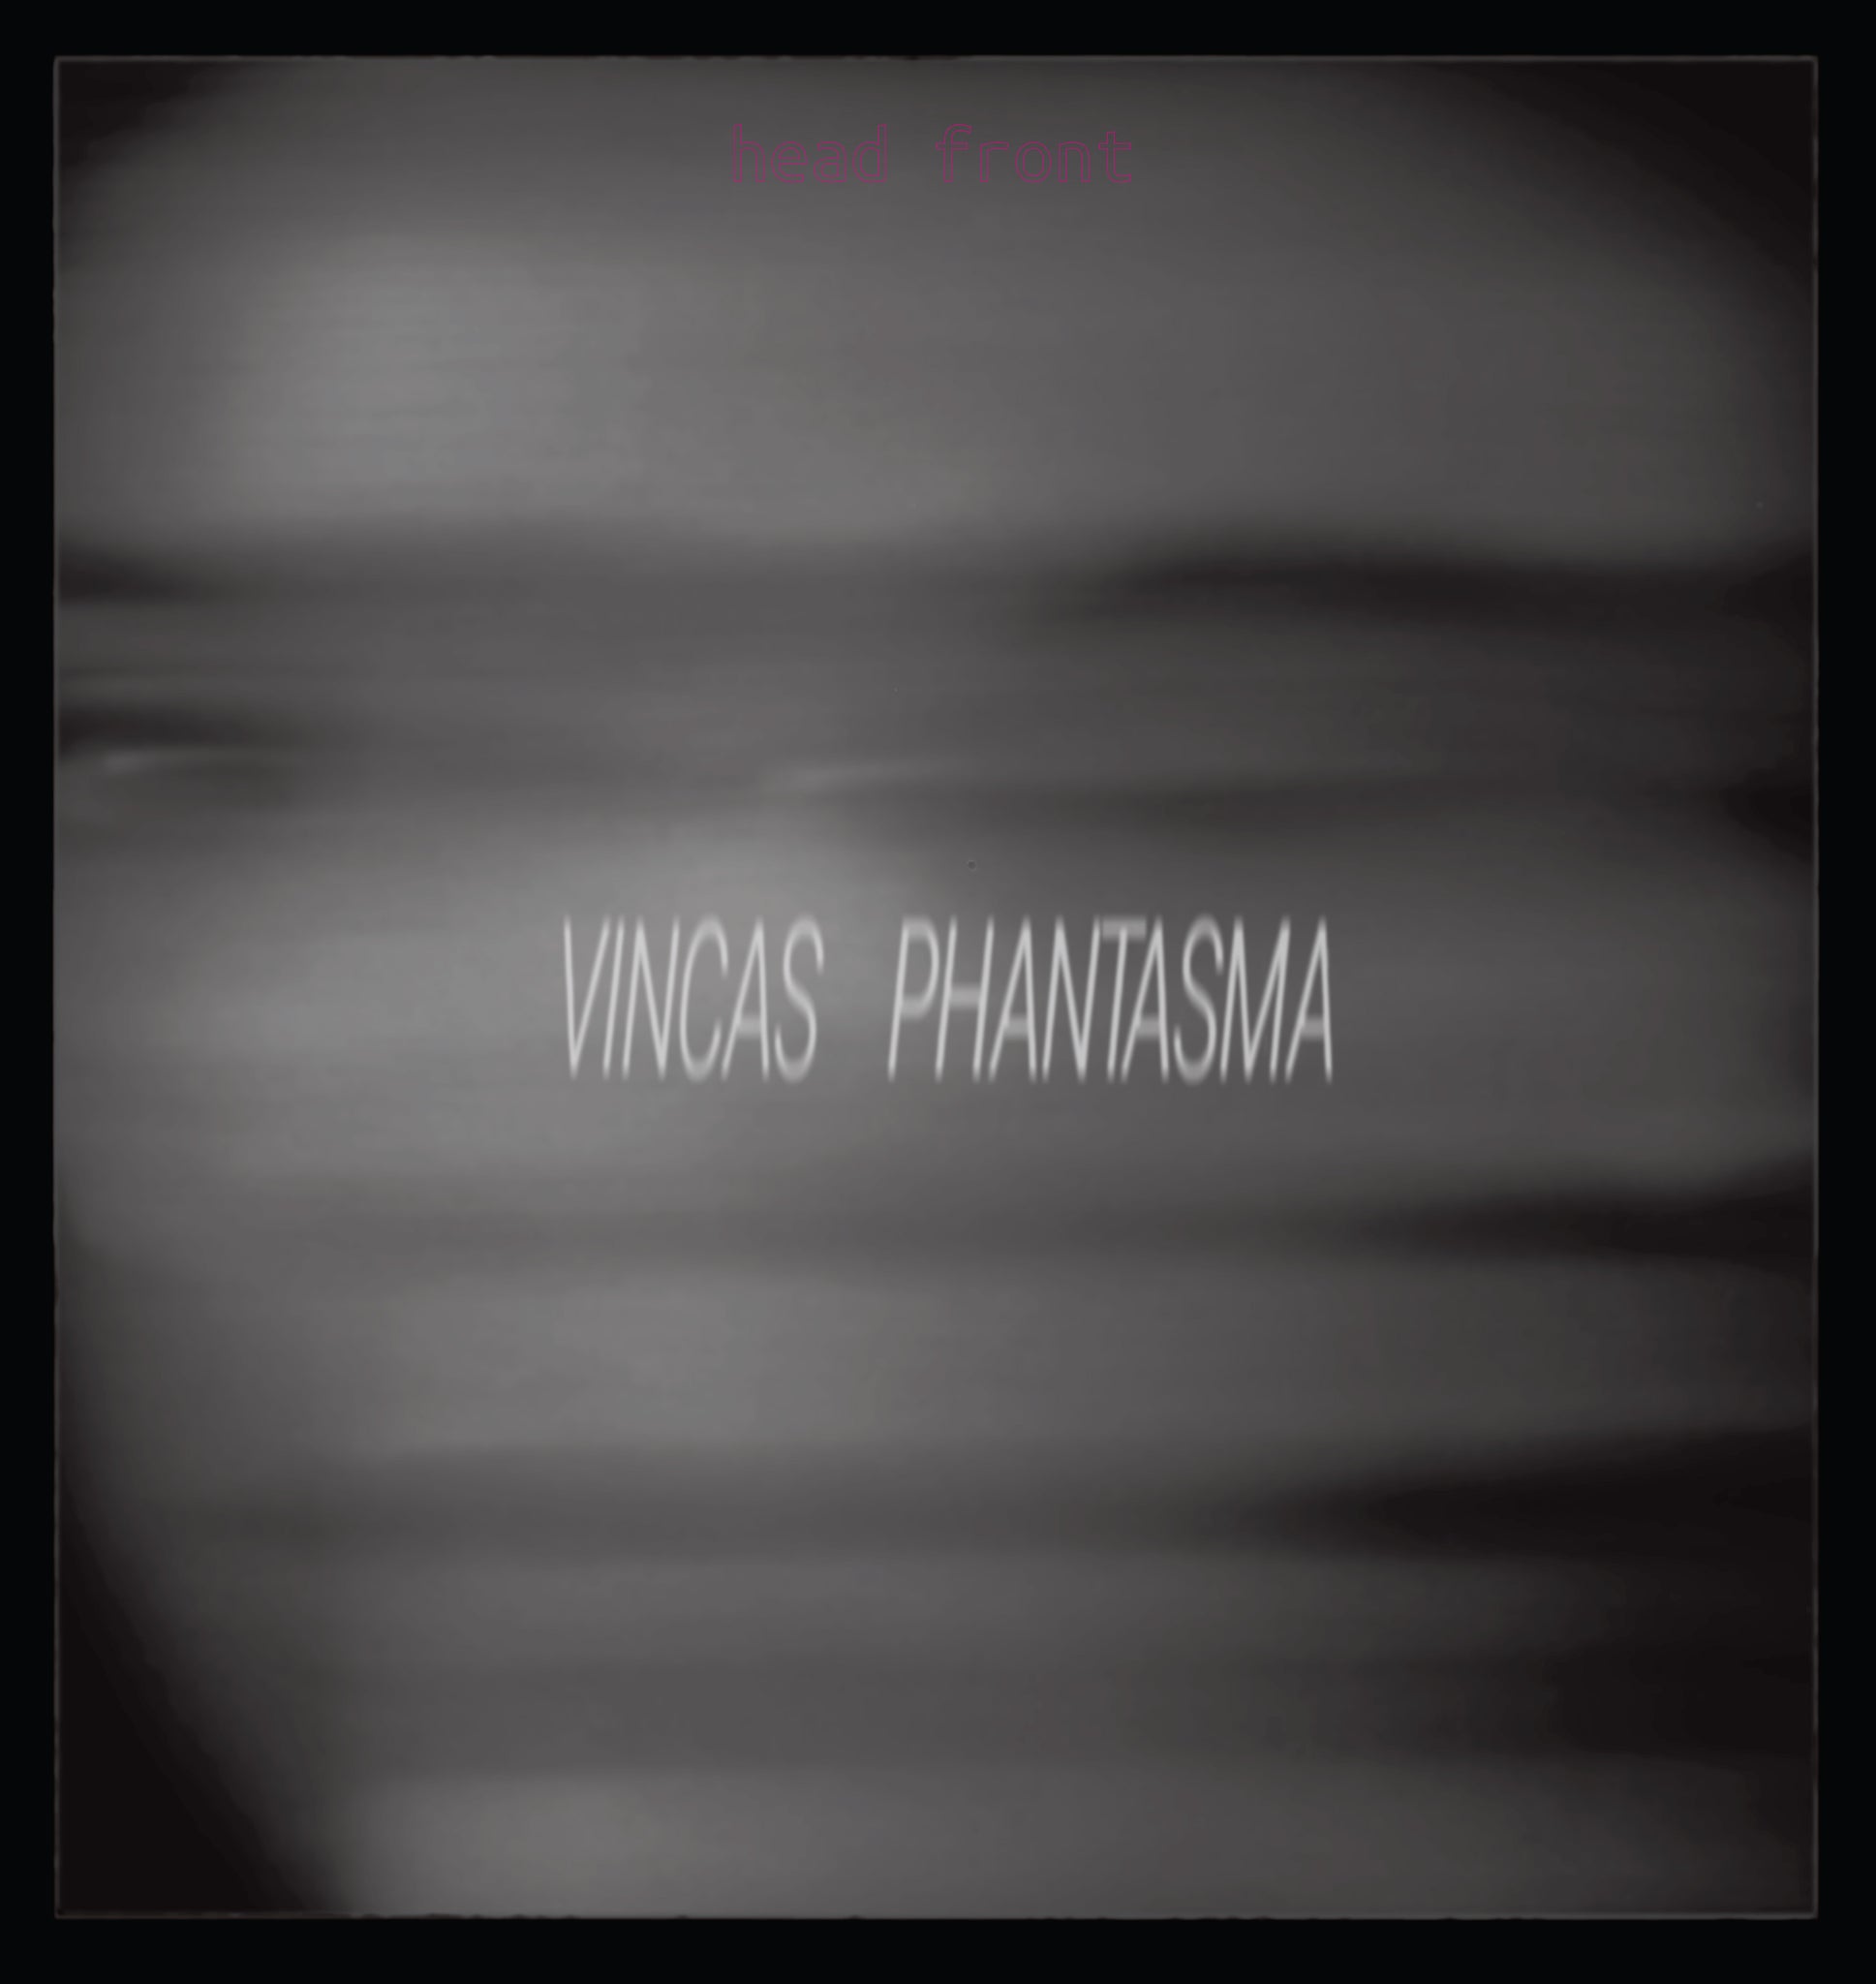 Vincas "Phantasma" LP